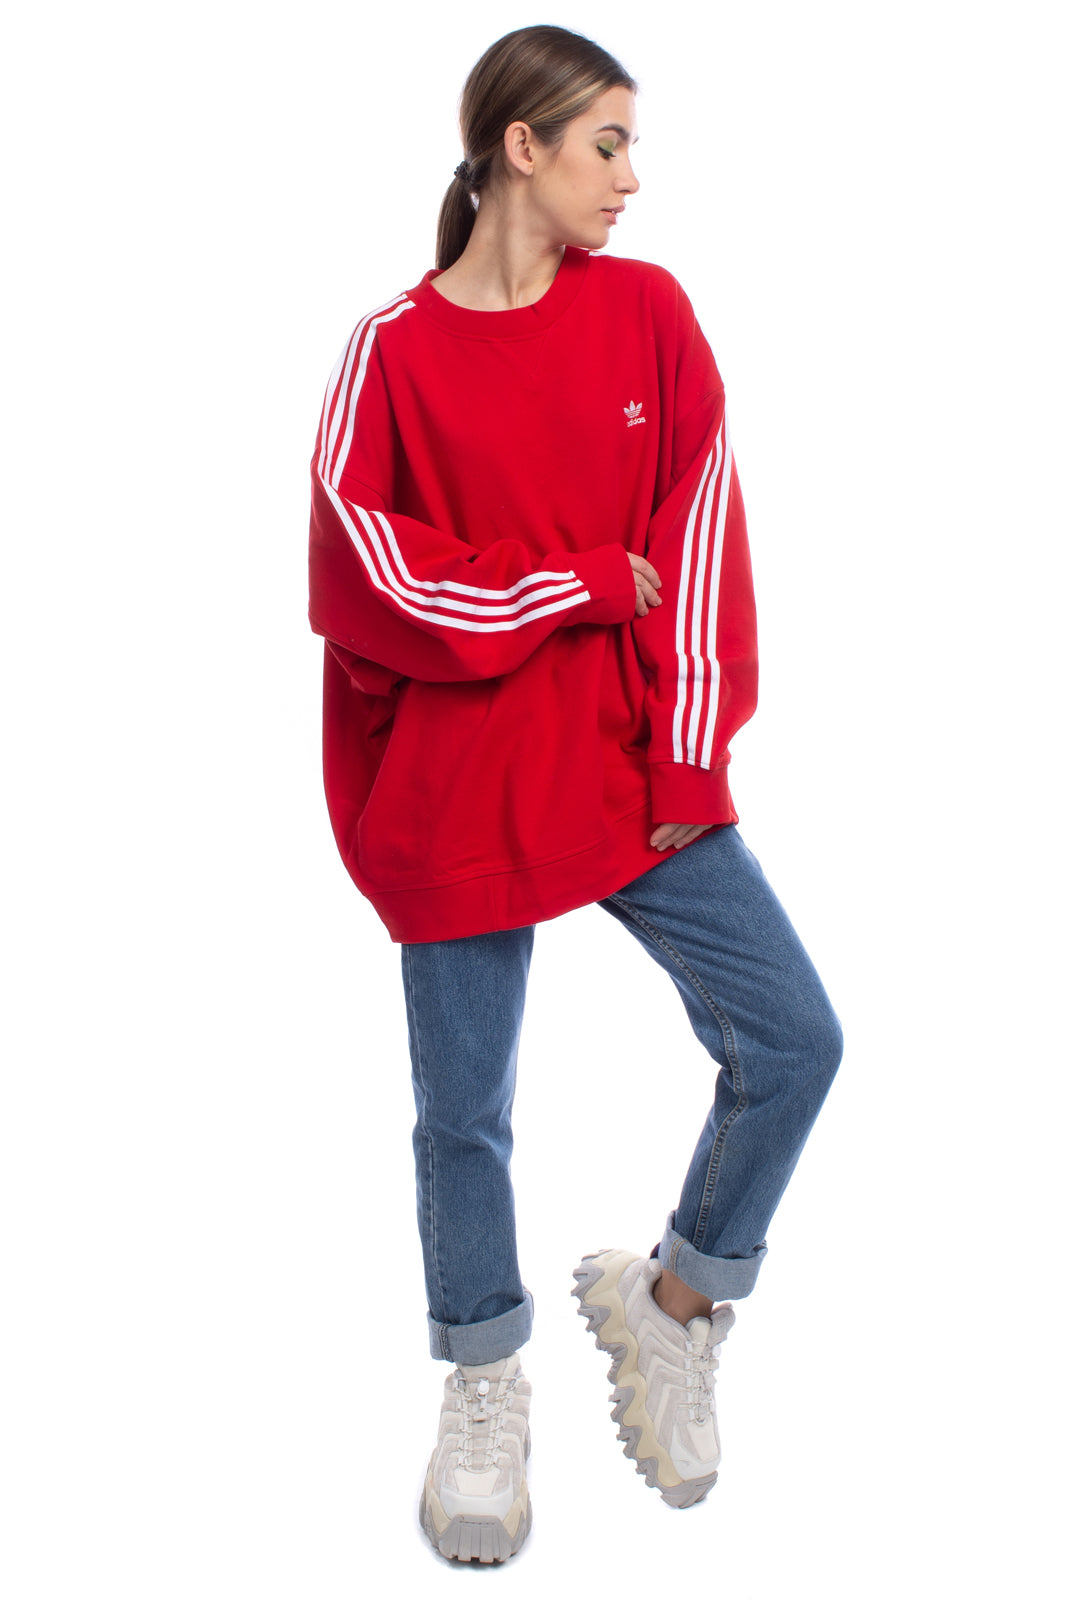 ADIDAS ORIGINALS Sweatshirt Plus Size 3X Two Tone 3-Iconic Stripes Round Neck gallery main photo